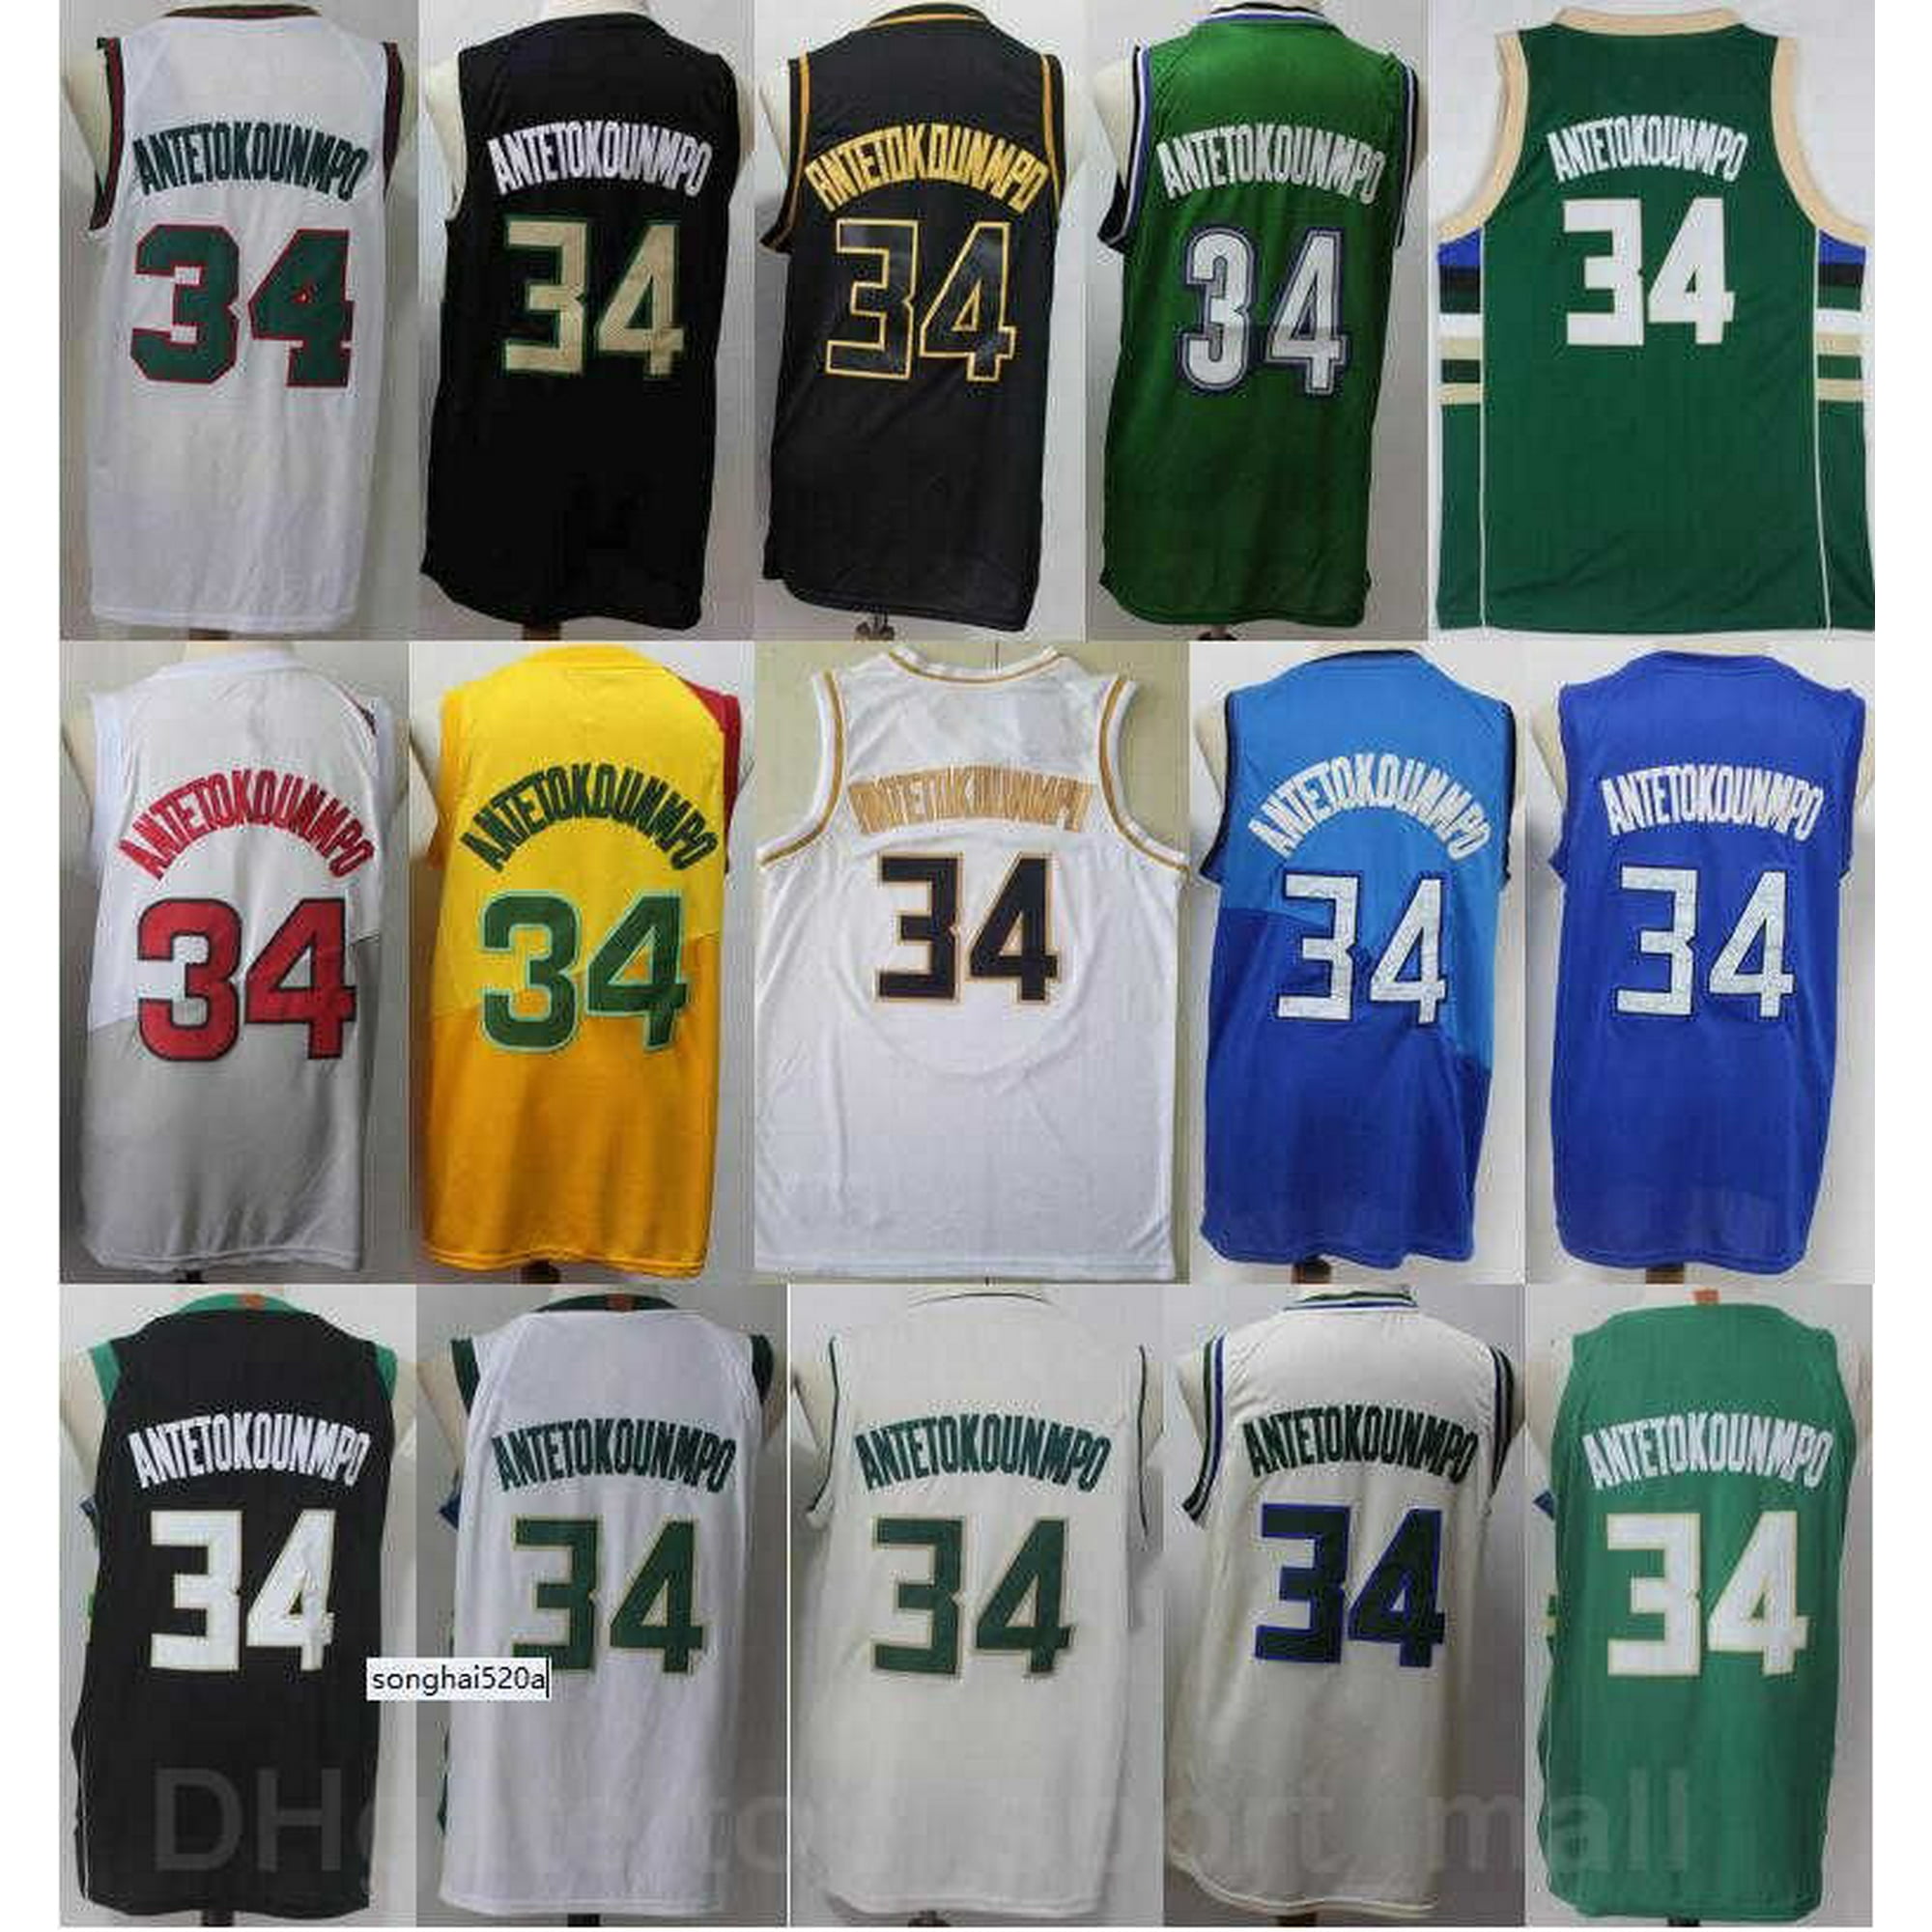 Giannis Antetokounmpo Stitched Jersey Men's NBA Jersey Courtside Edition, Adult Unisex, Size: Large, Black